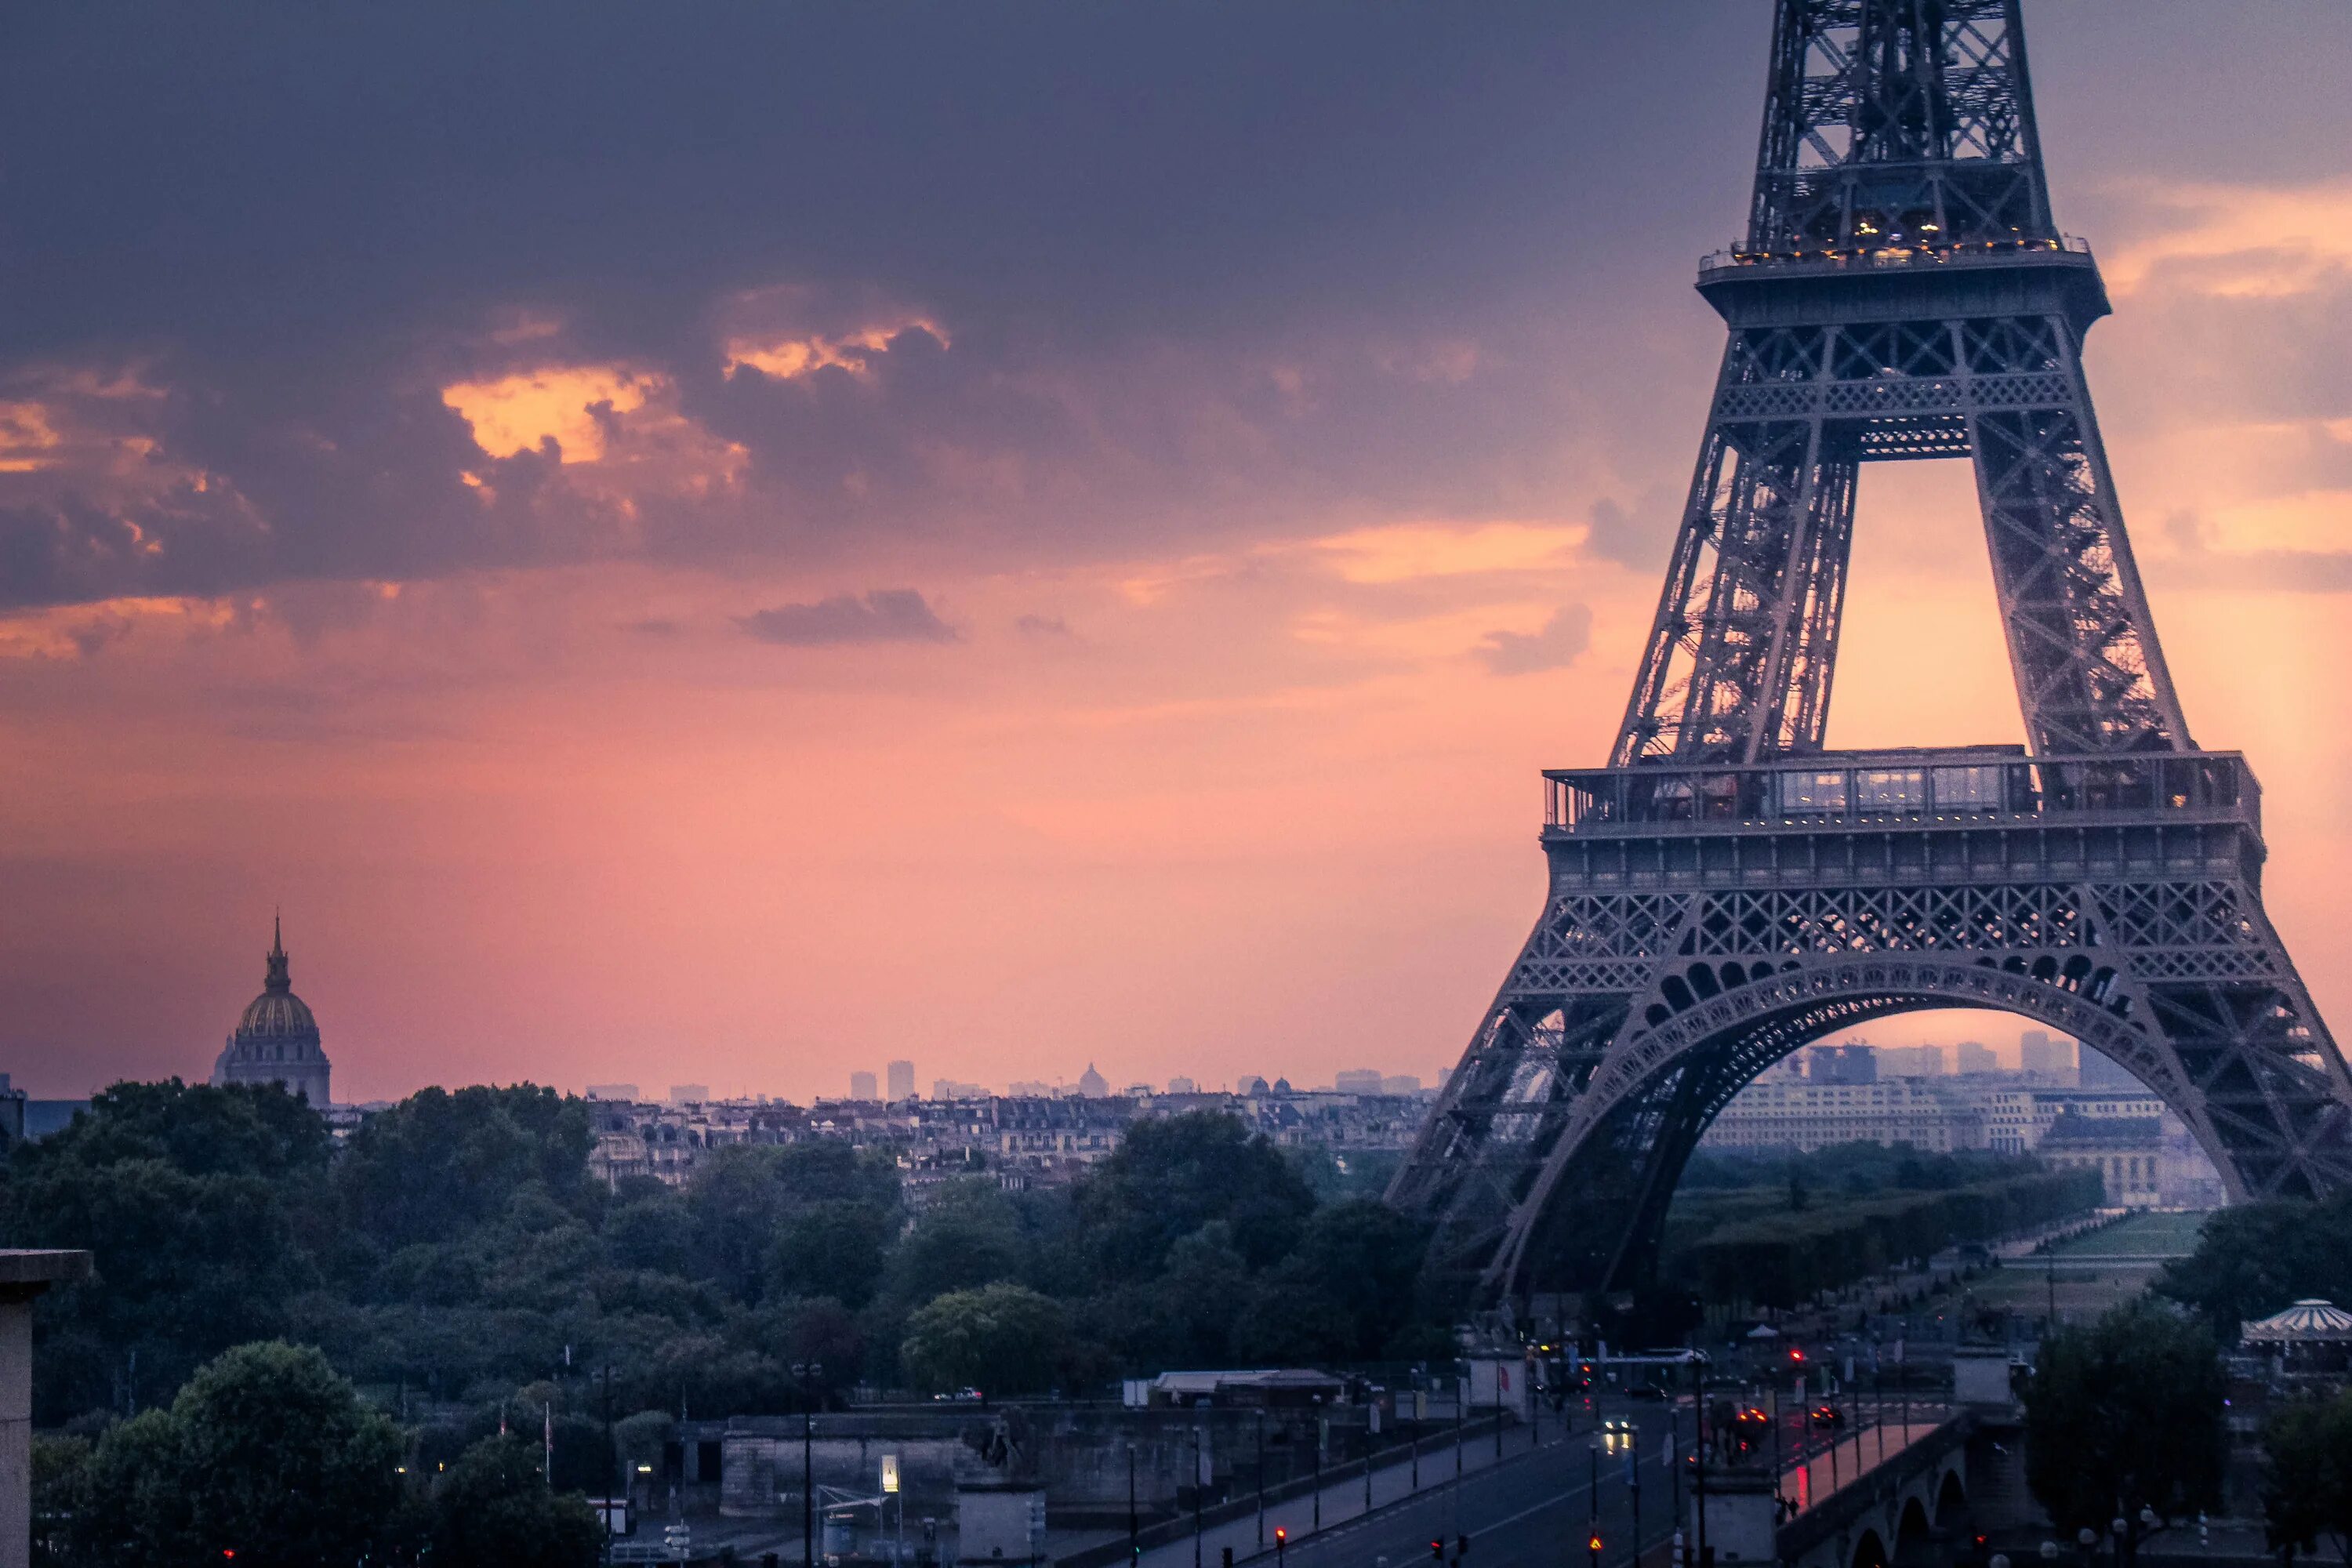 Француз рассвет. Эйфель башня Франция. Франция эльфивая башня Эстетика. Франция Эйфелева башня закат. Париж Эйфелева башня Эстетика.